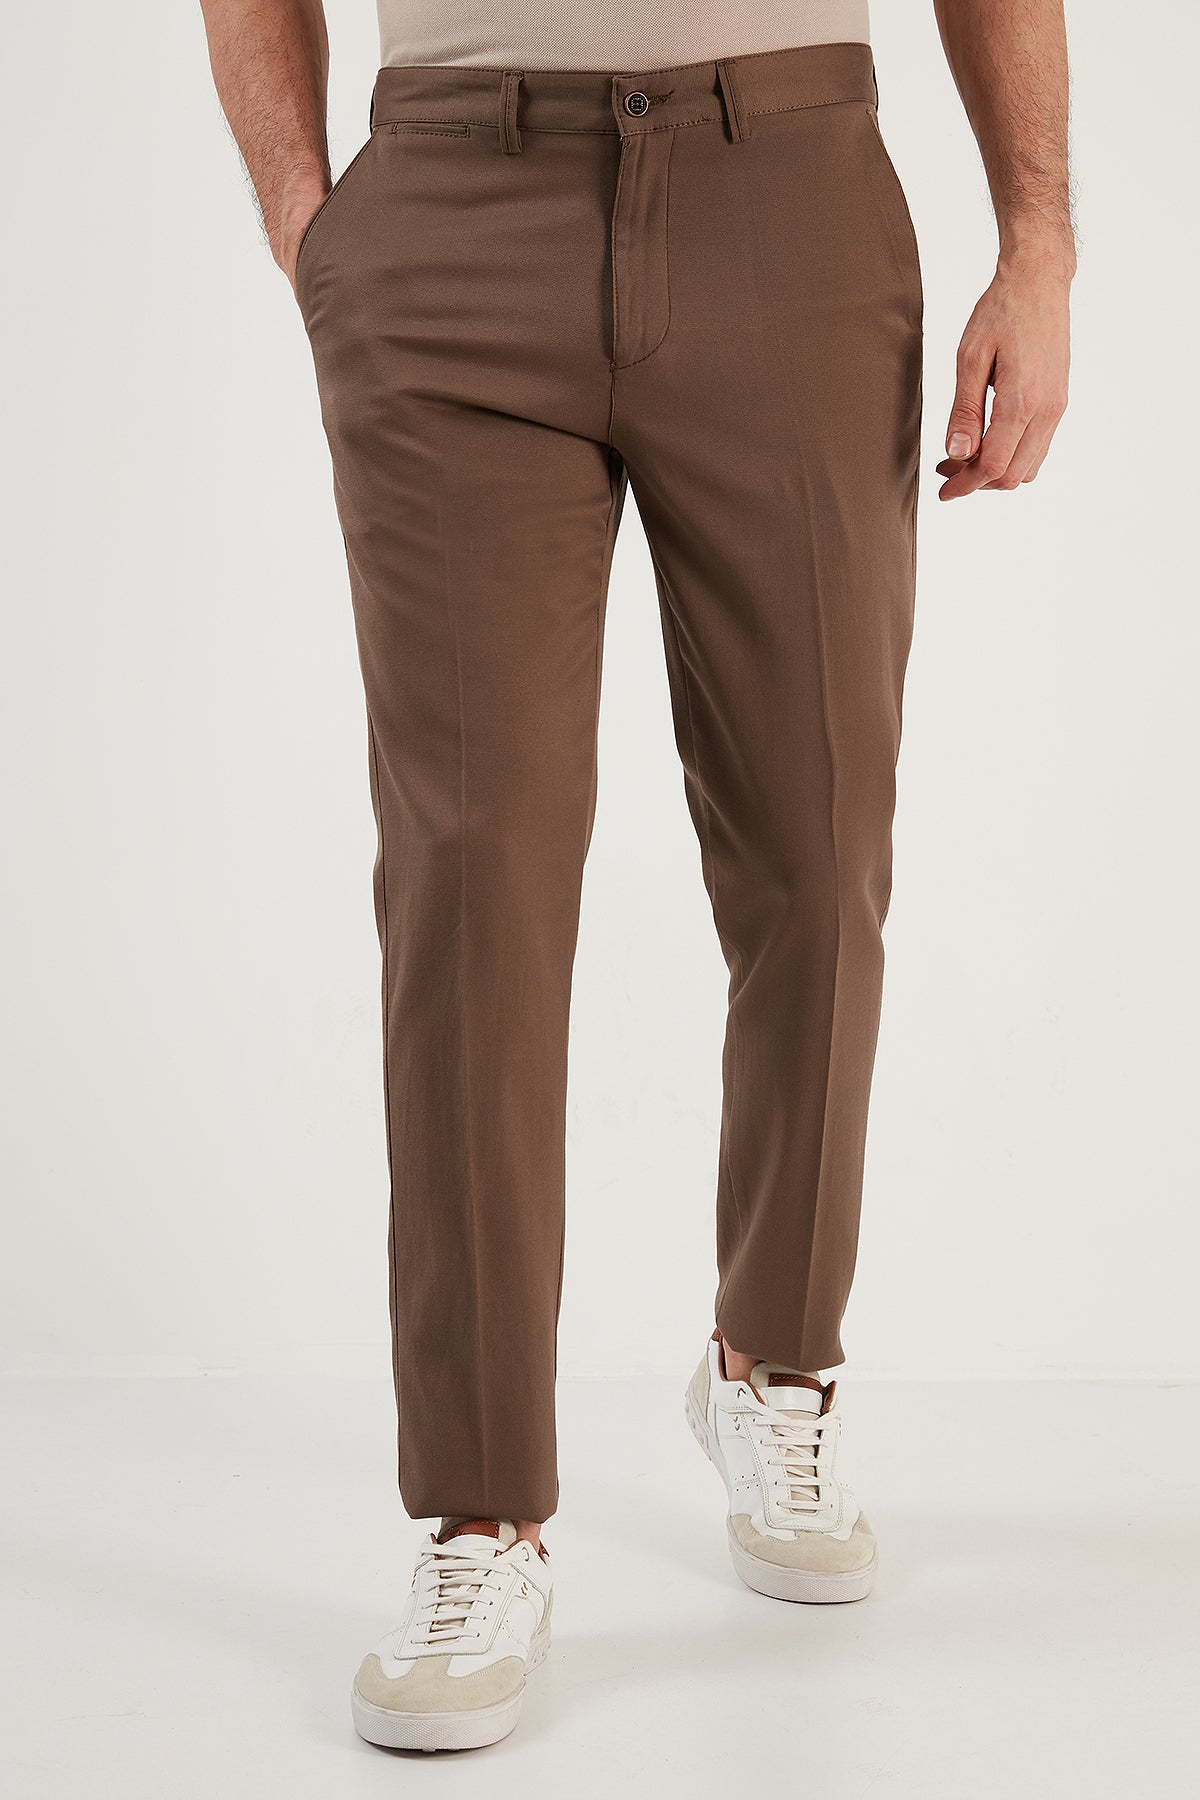 Buratti Cotton Normal Waist Regular Fit Straight Leg Men's Trousers - GRAY